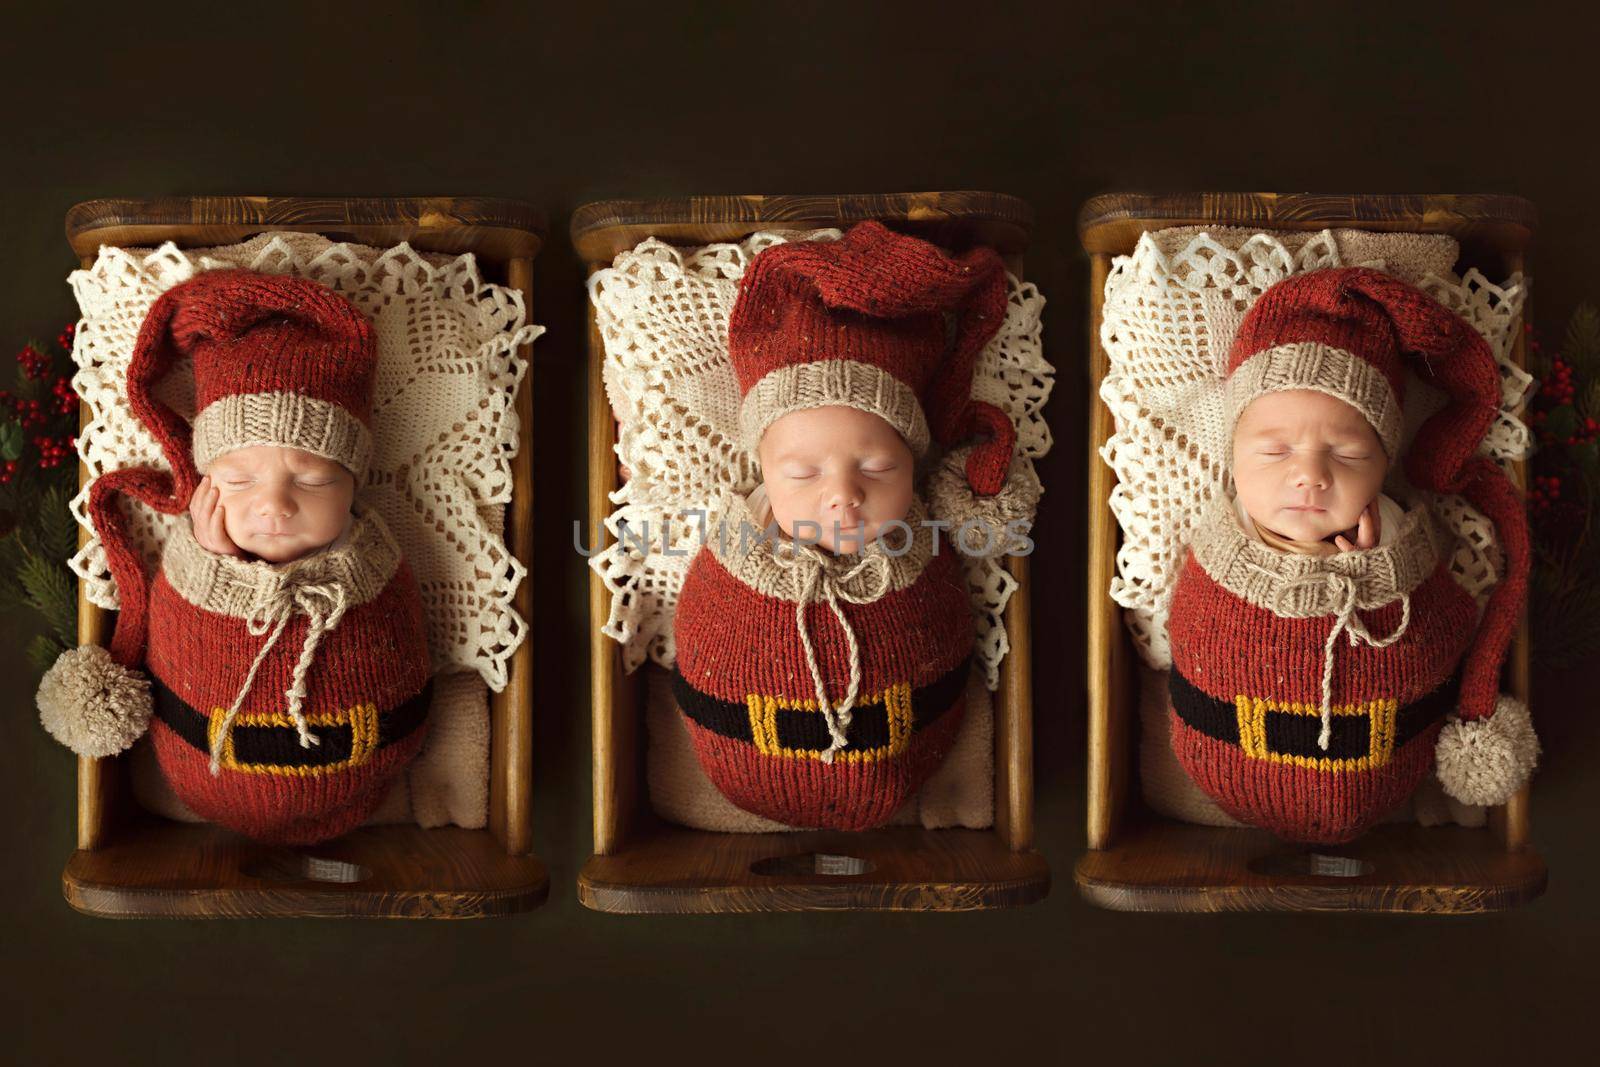 Three newborn brothers sleep in cribs dressed as elves. by Vad-Len